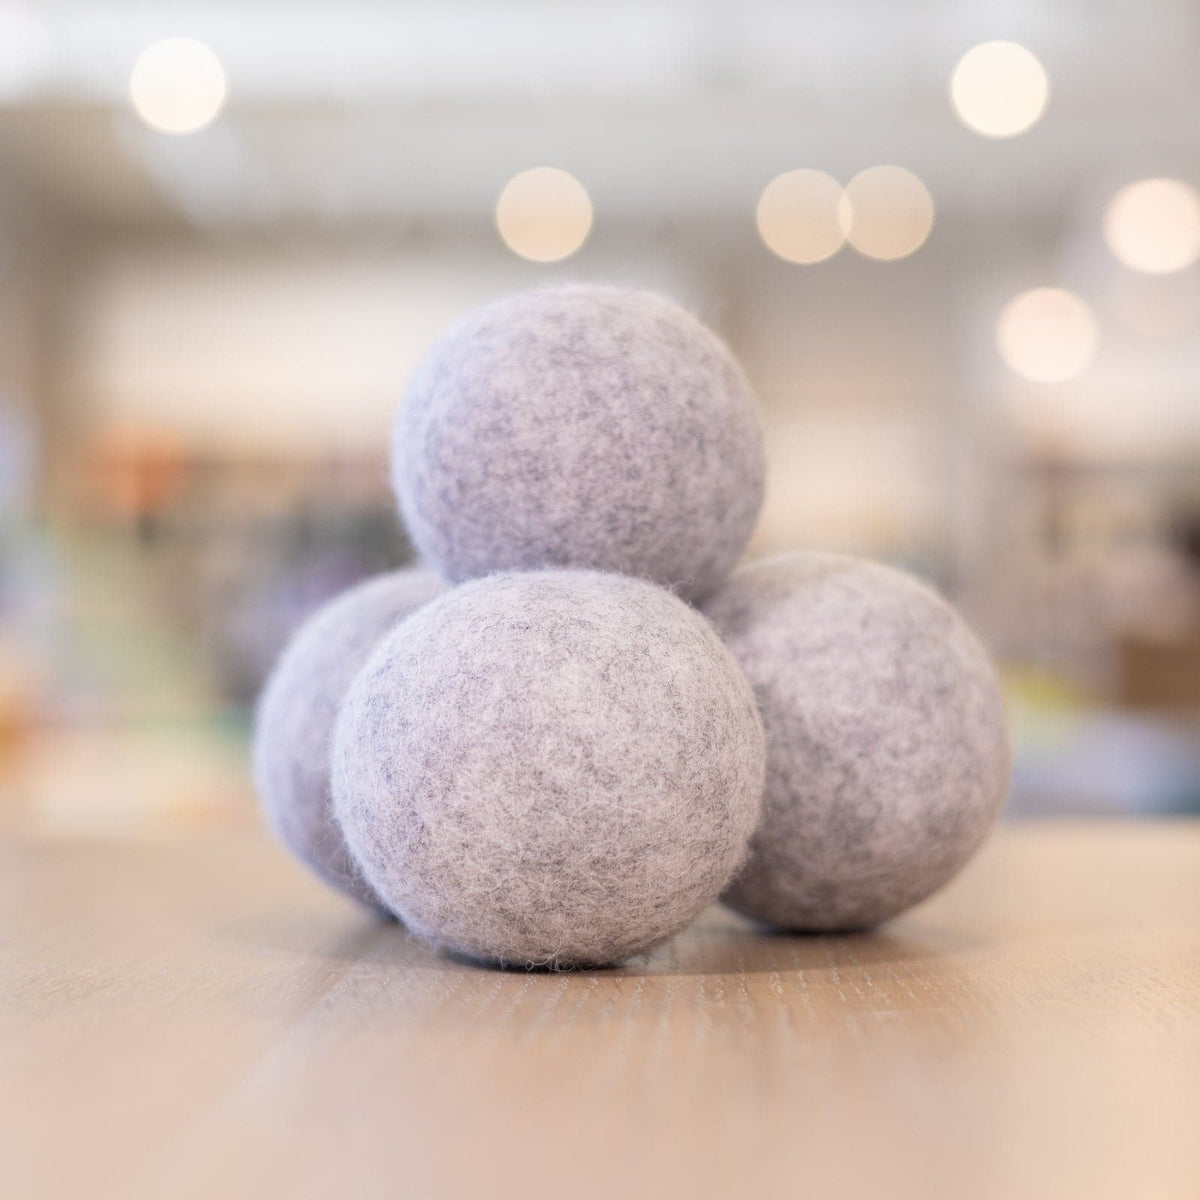 Fresh Cotton Wool Dryer Balls (Set of 3) – Buff City Soap